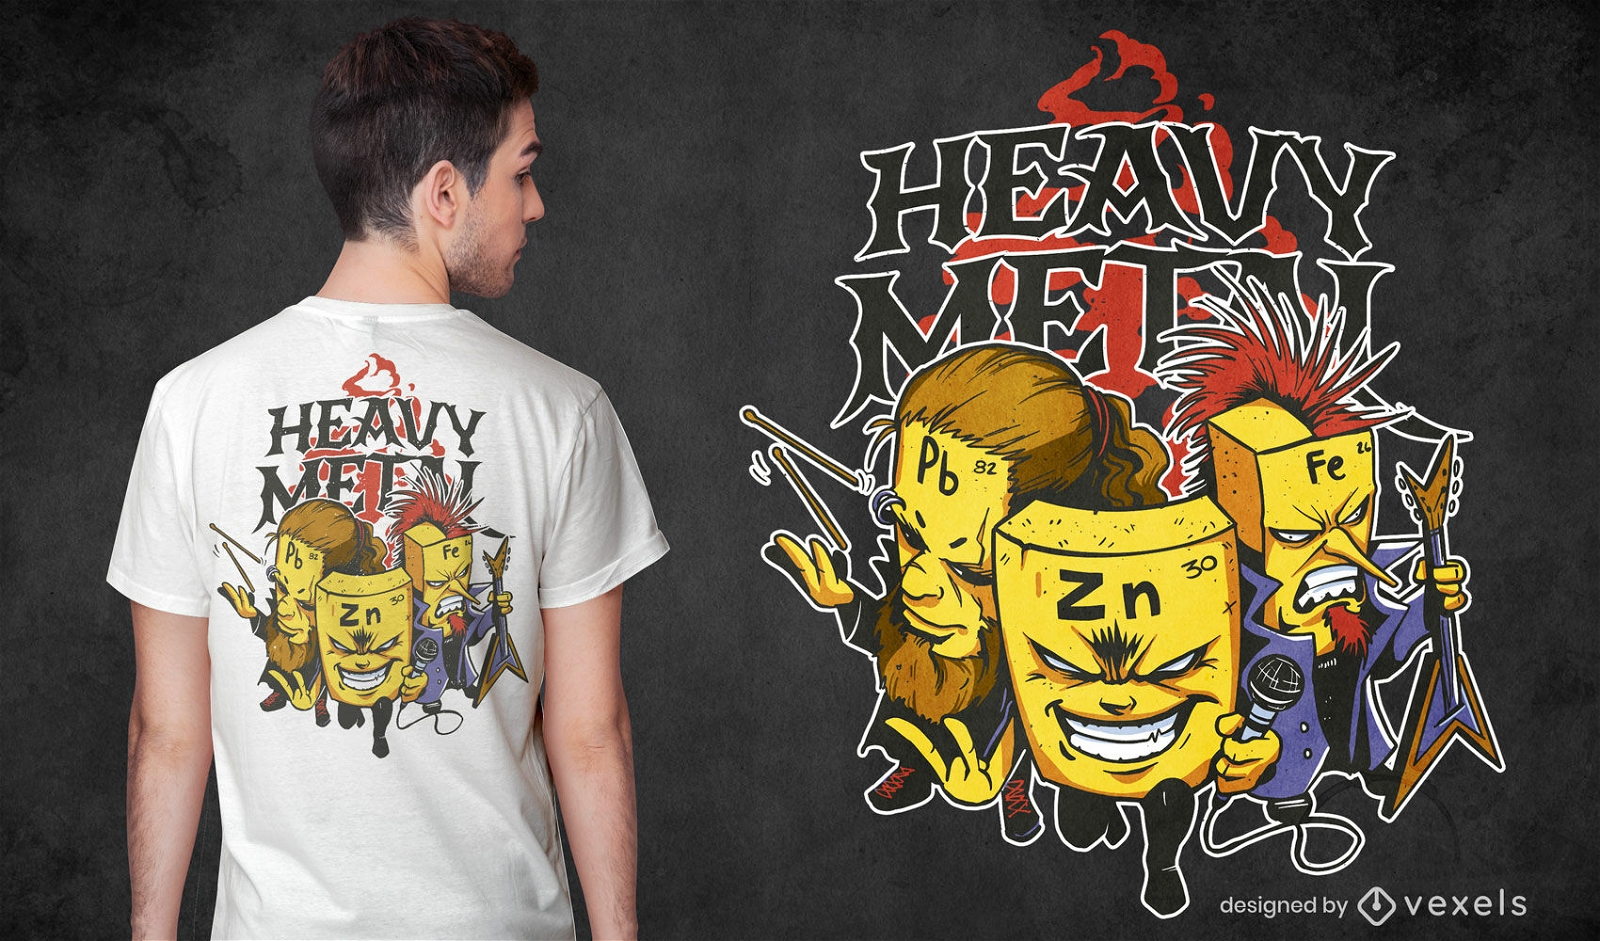 Funny heavy metal t-shirt design